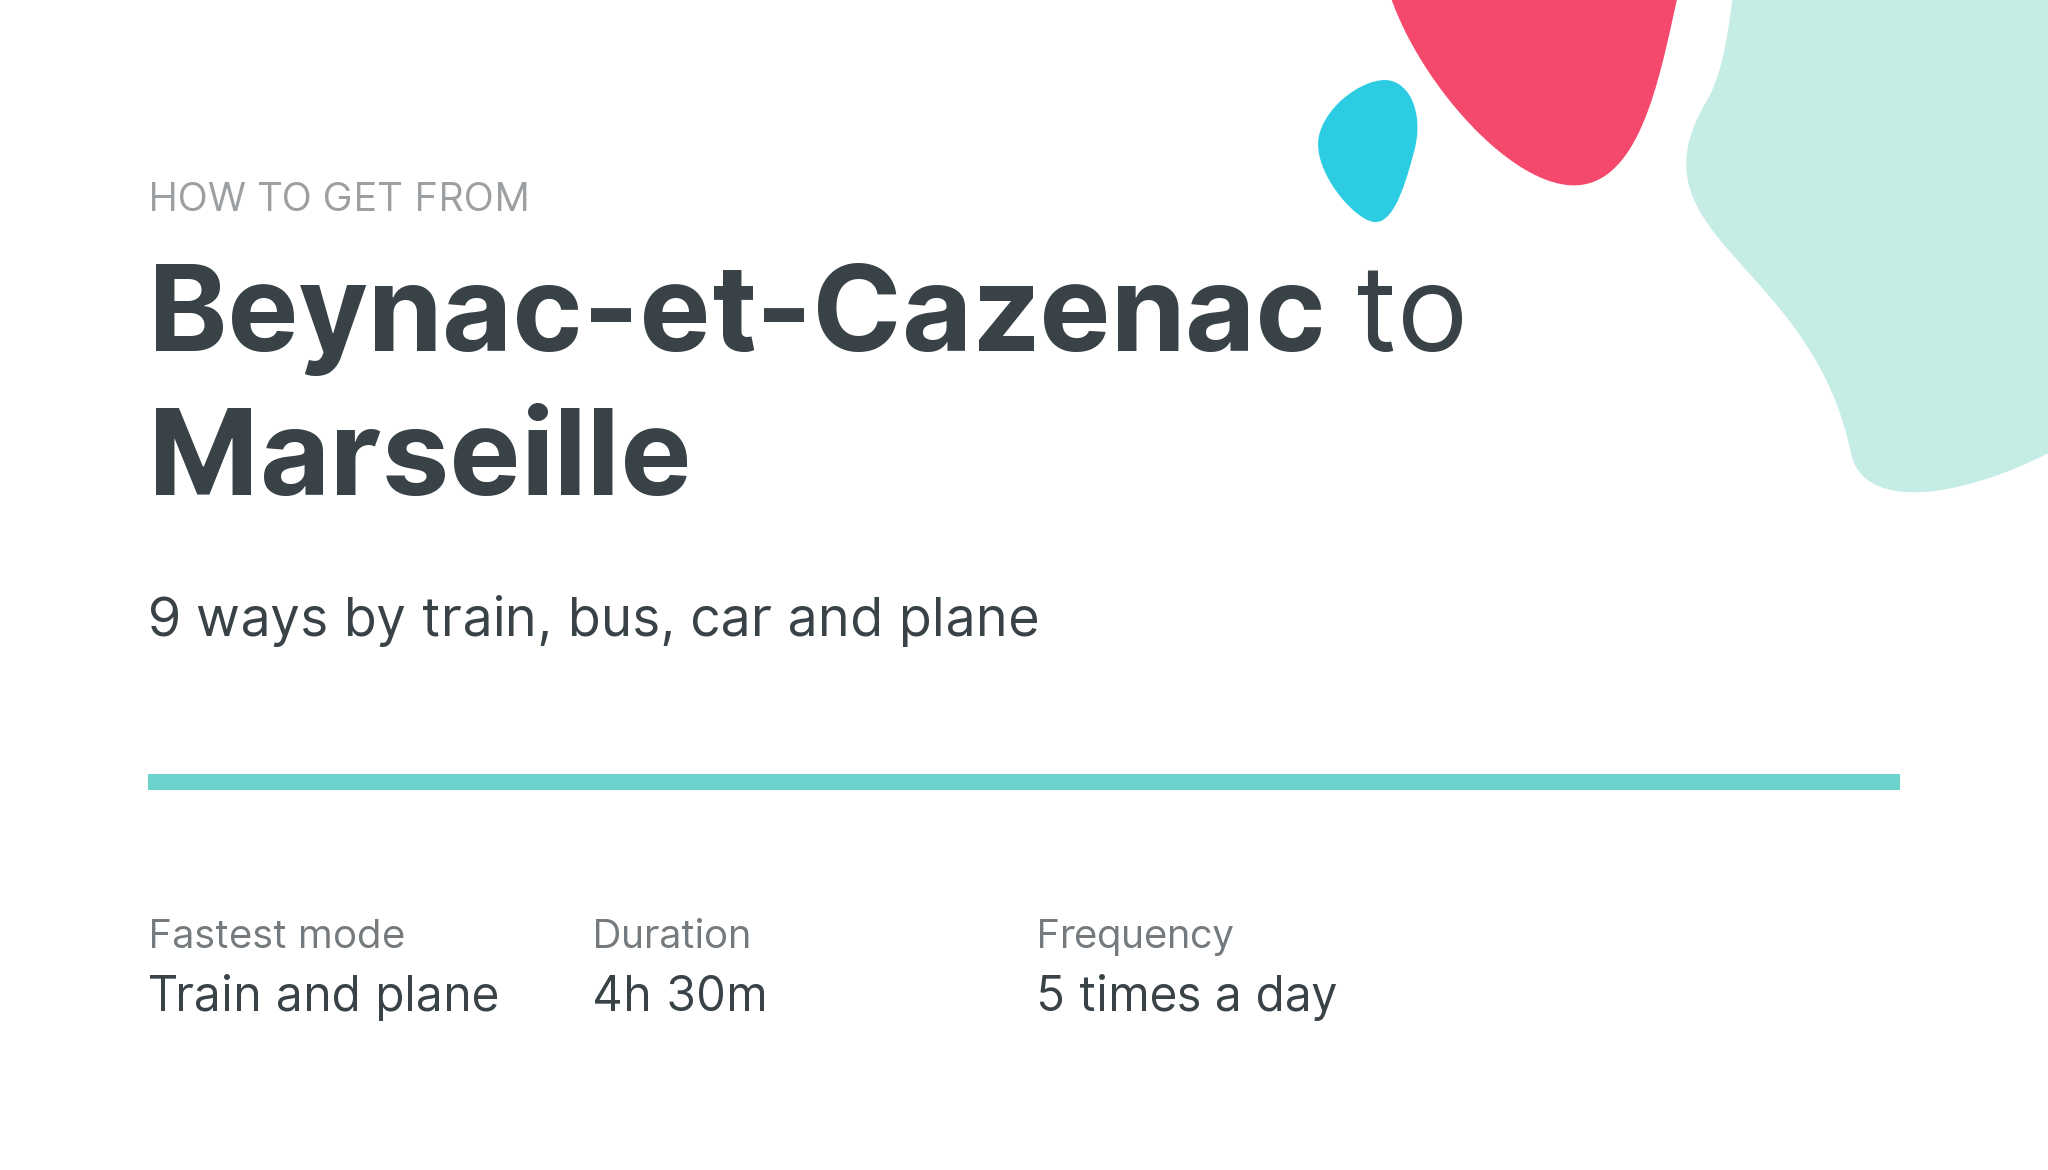 How do I get from Beynac-et-Cazenac to Marseille